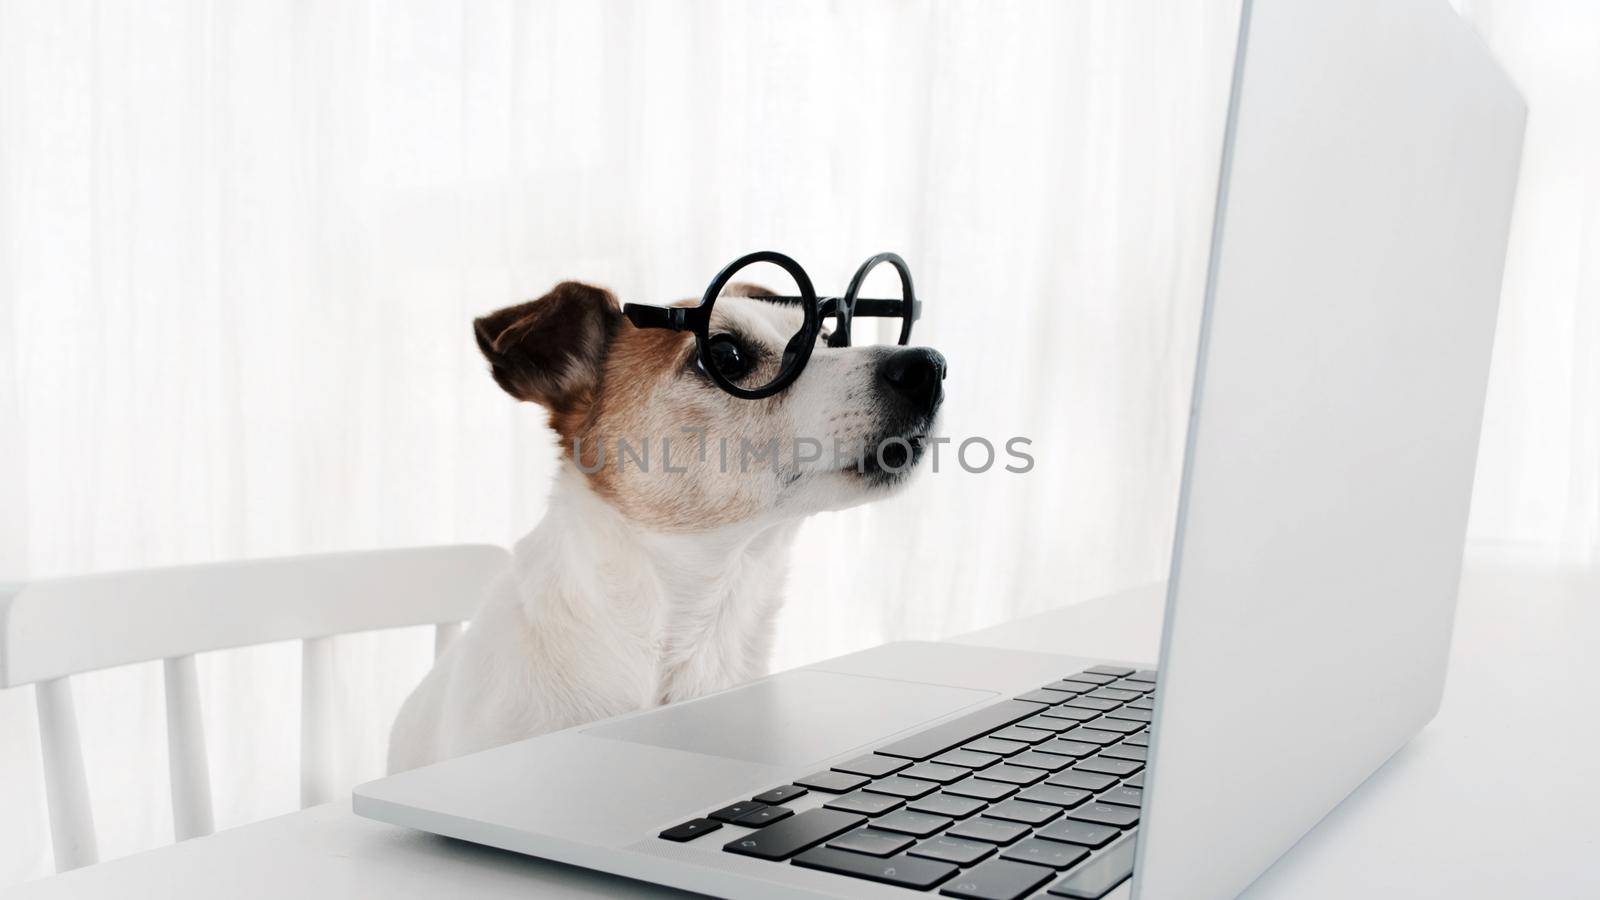 Dog using computer in nerd glasses laptop keyboard by Demkat